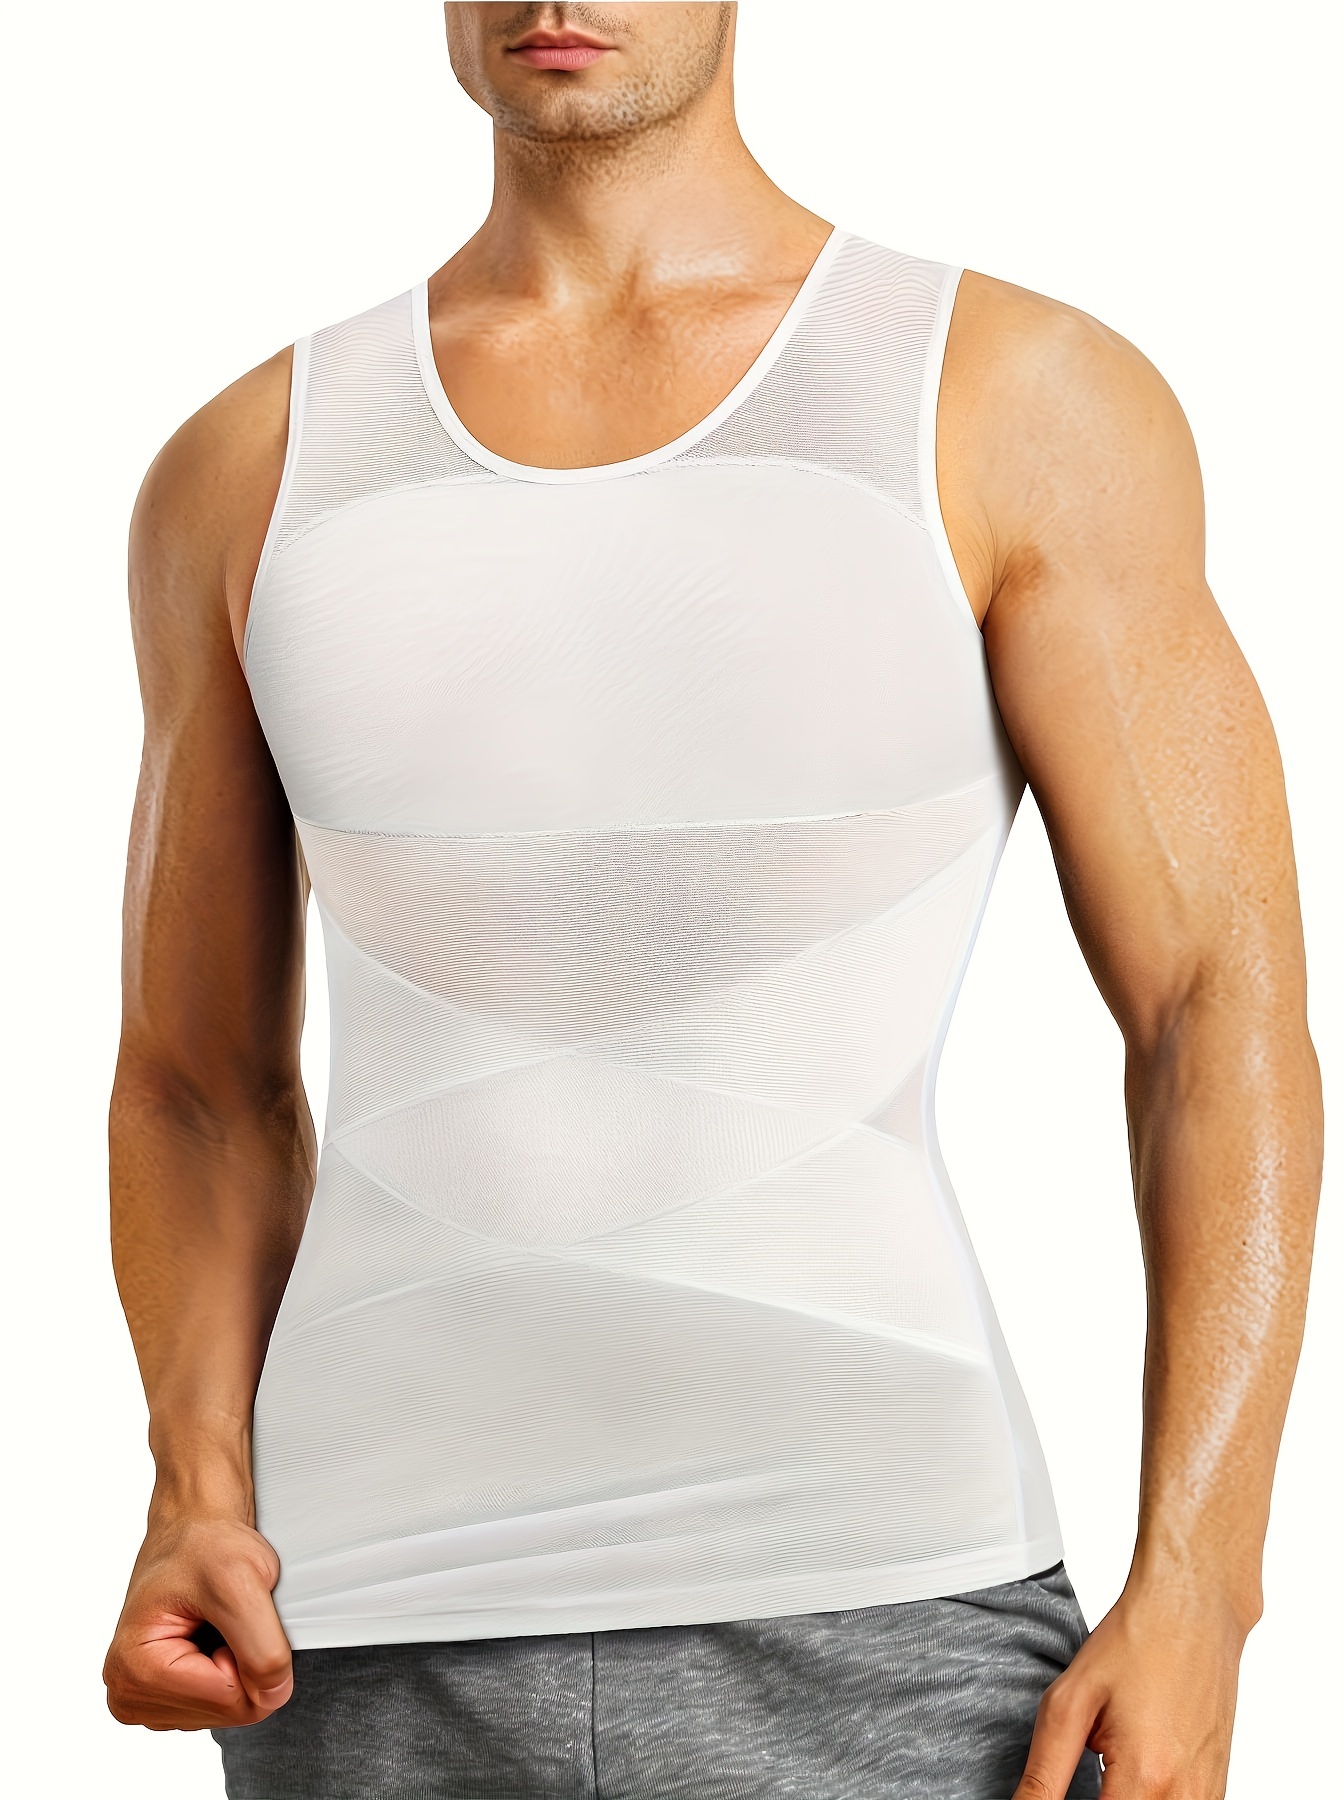 * Mens Compression Shirt Slimming Body Shaper Vest Sleeveless Undershirt  Tank Top Tummy Control Shapewear For Men